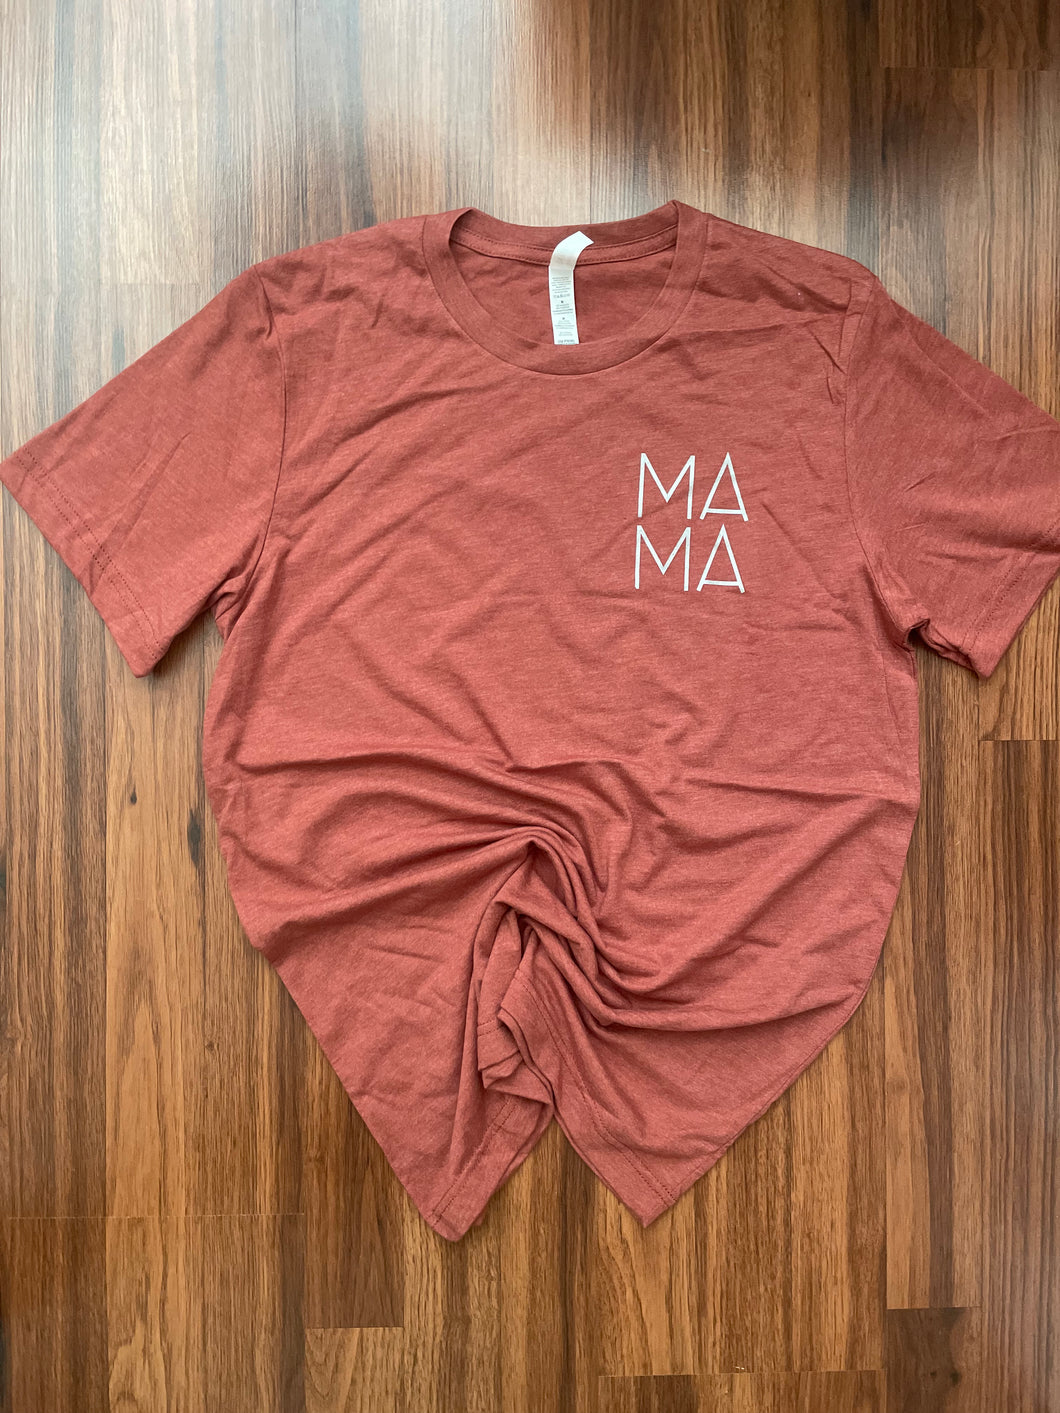 Mama (Silver) Screen Print Adult Shirt